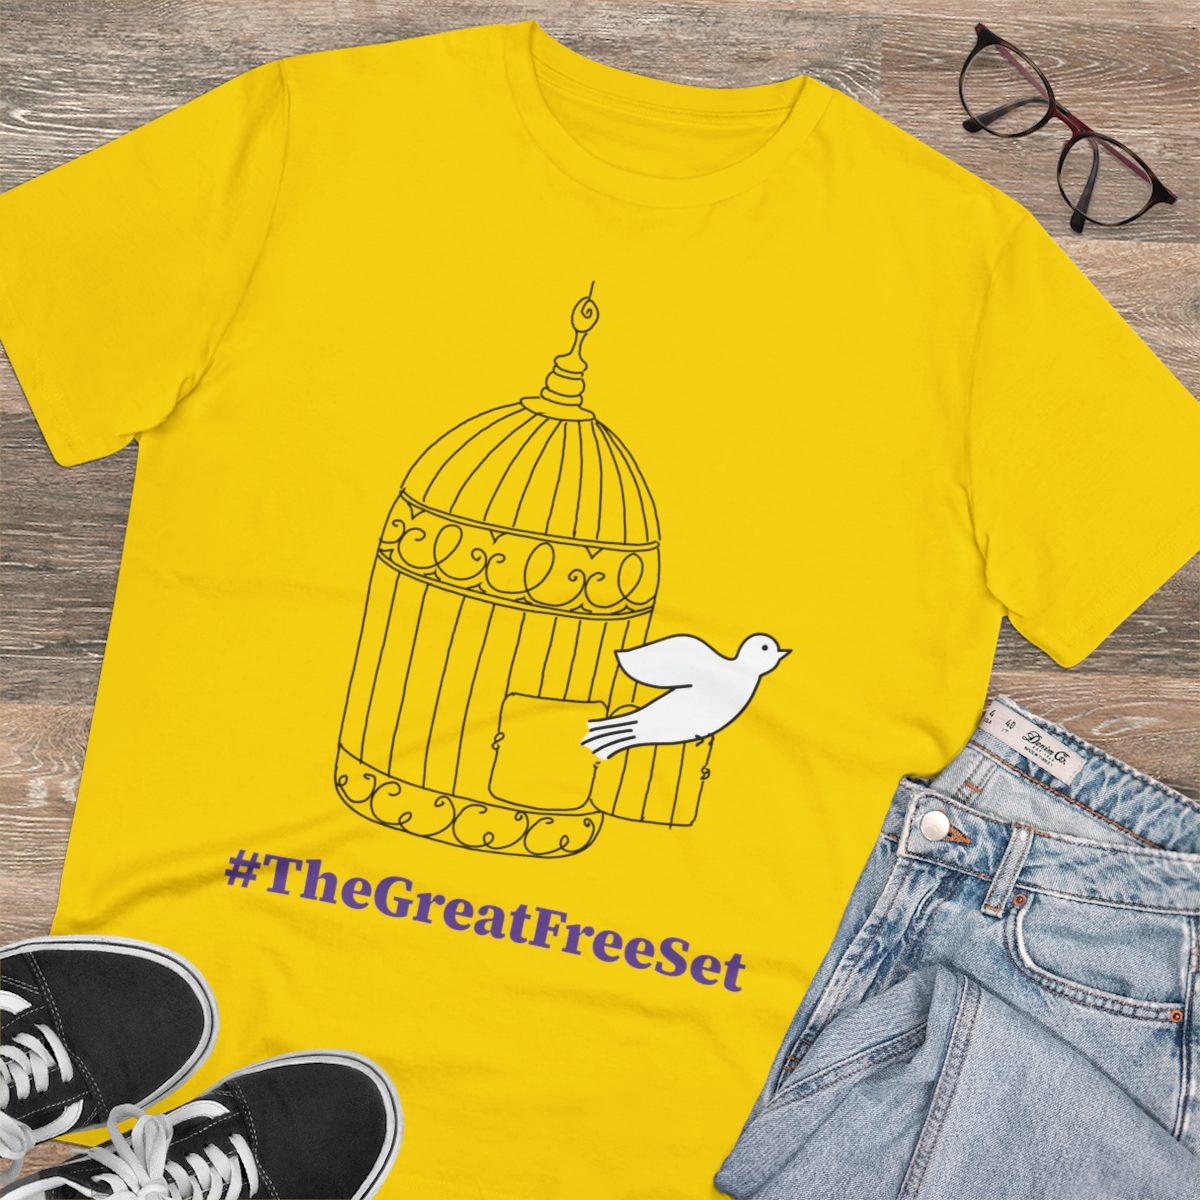 TheGreatFreeset_tshirt